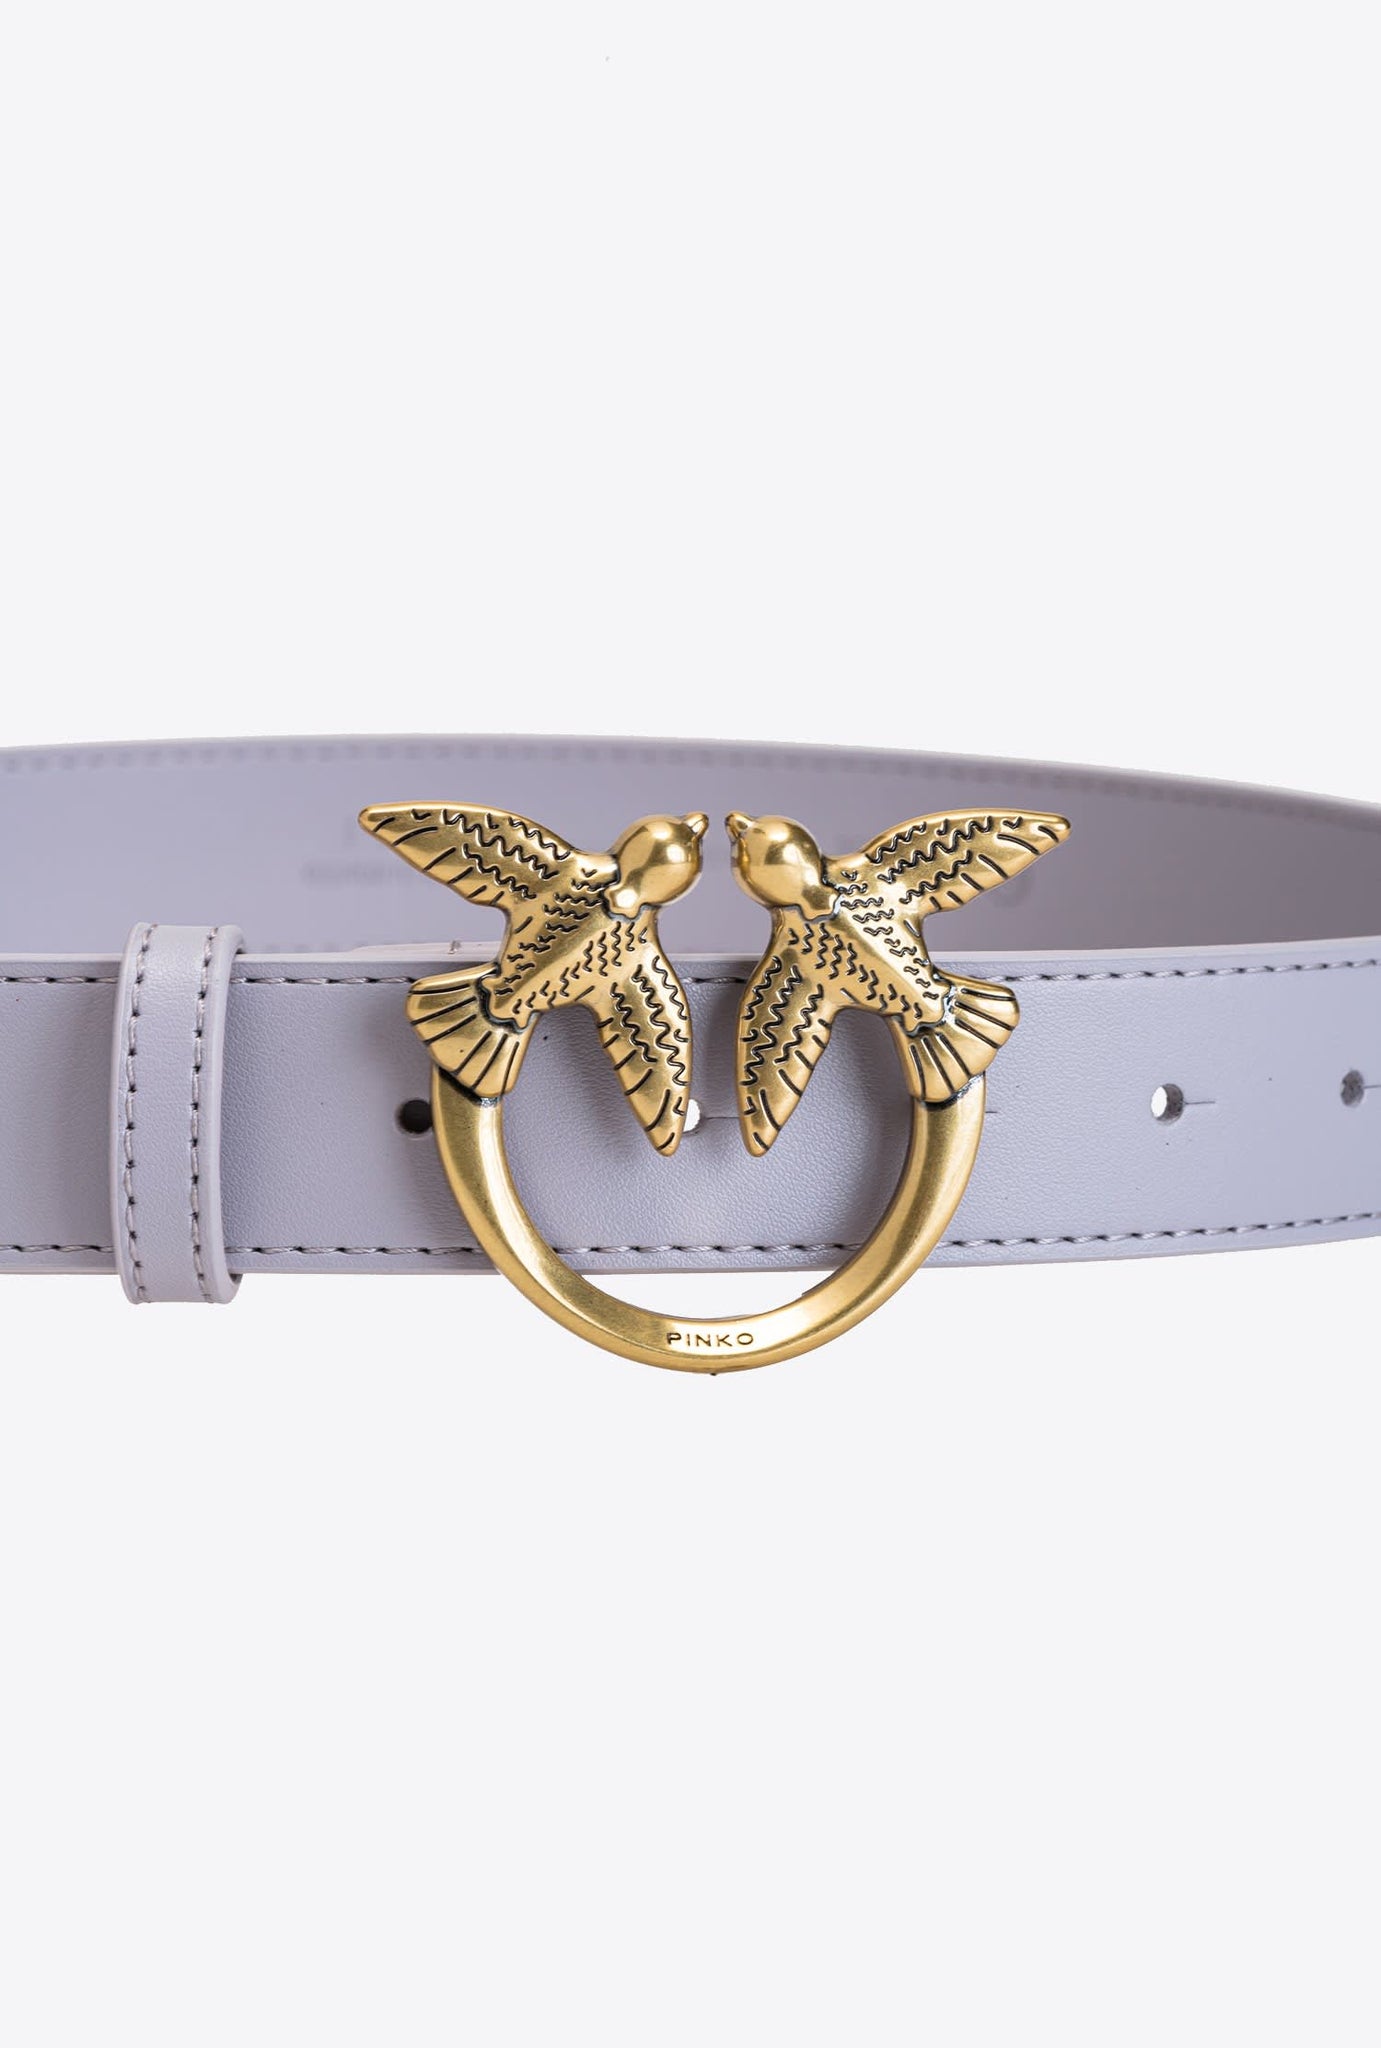 Cintura in Pelle con Logo Pinko / Grigio - Ideal Moda